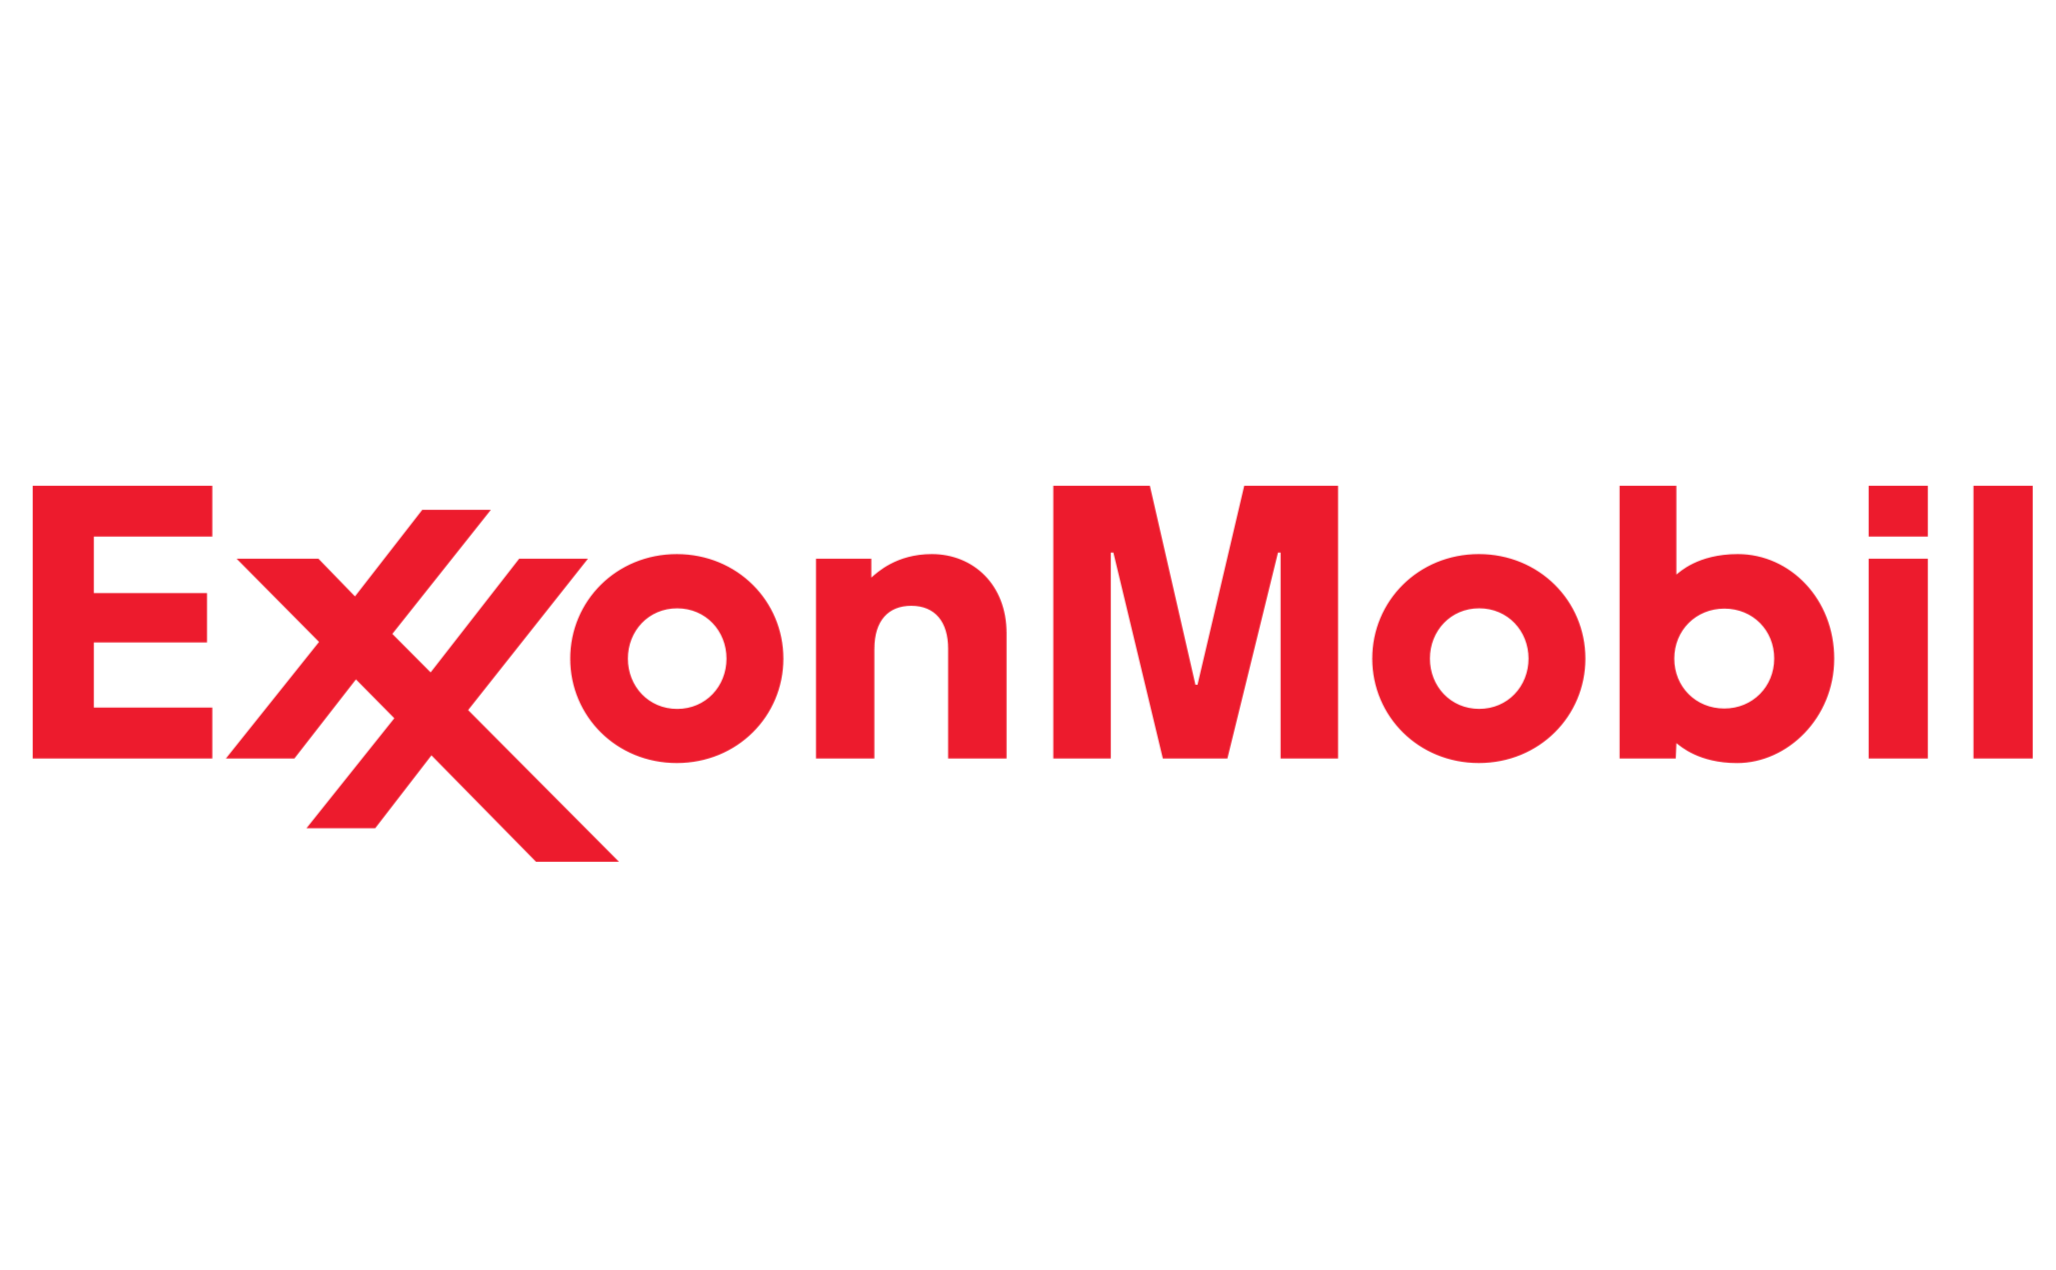 decorative: ExxonMobil logo